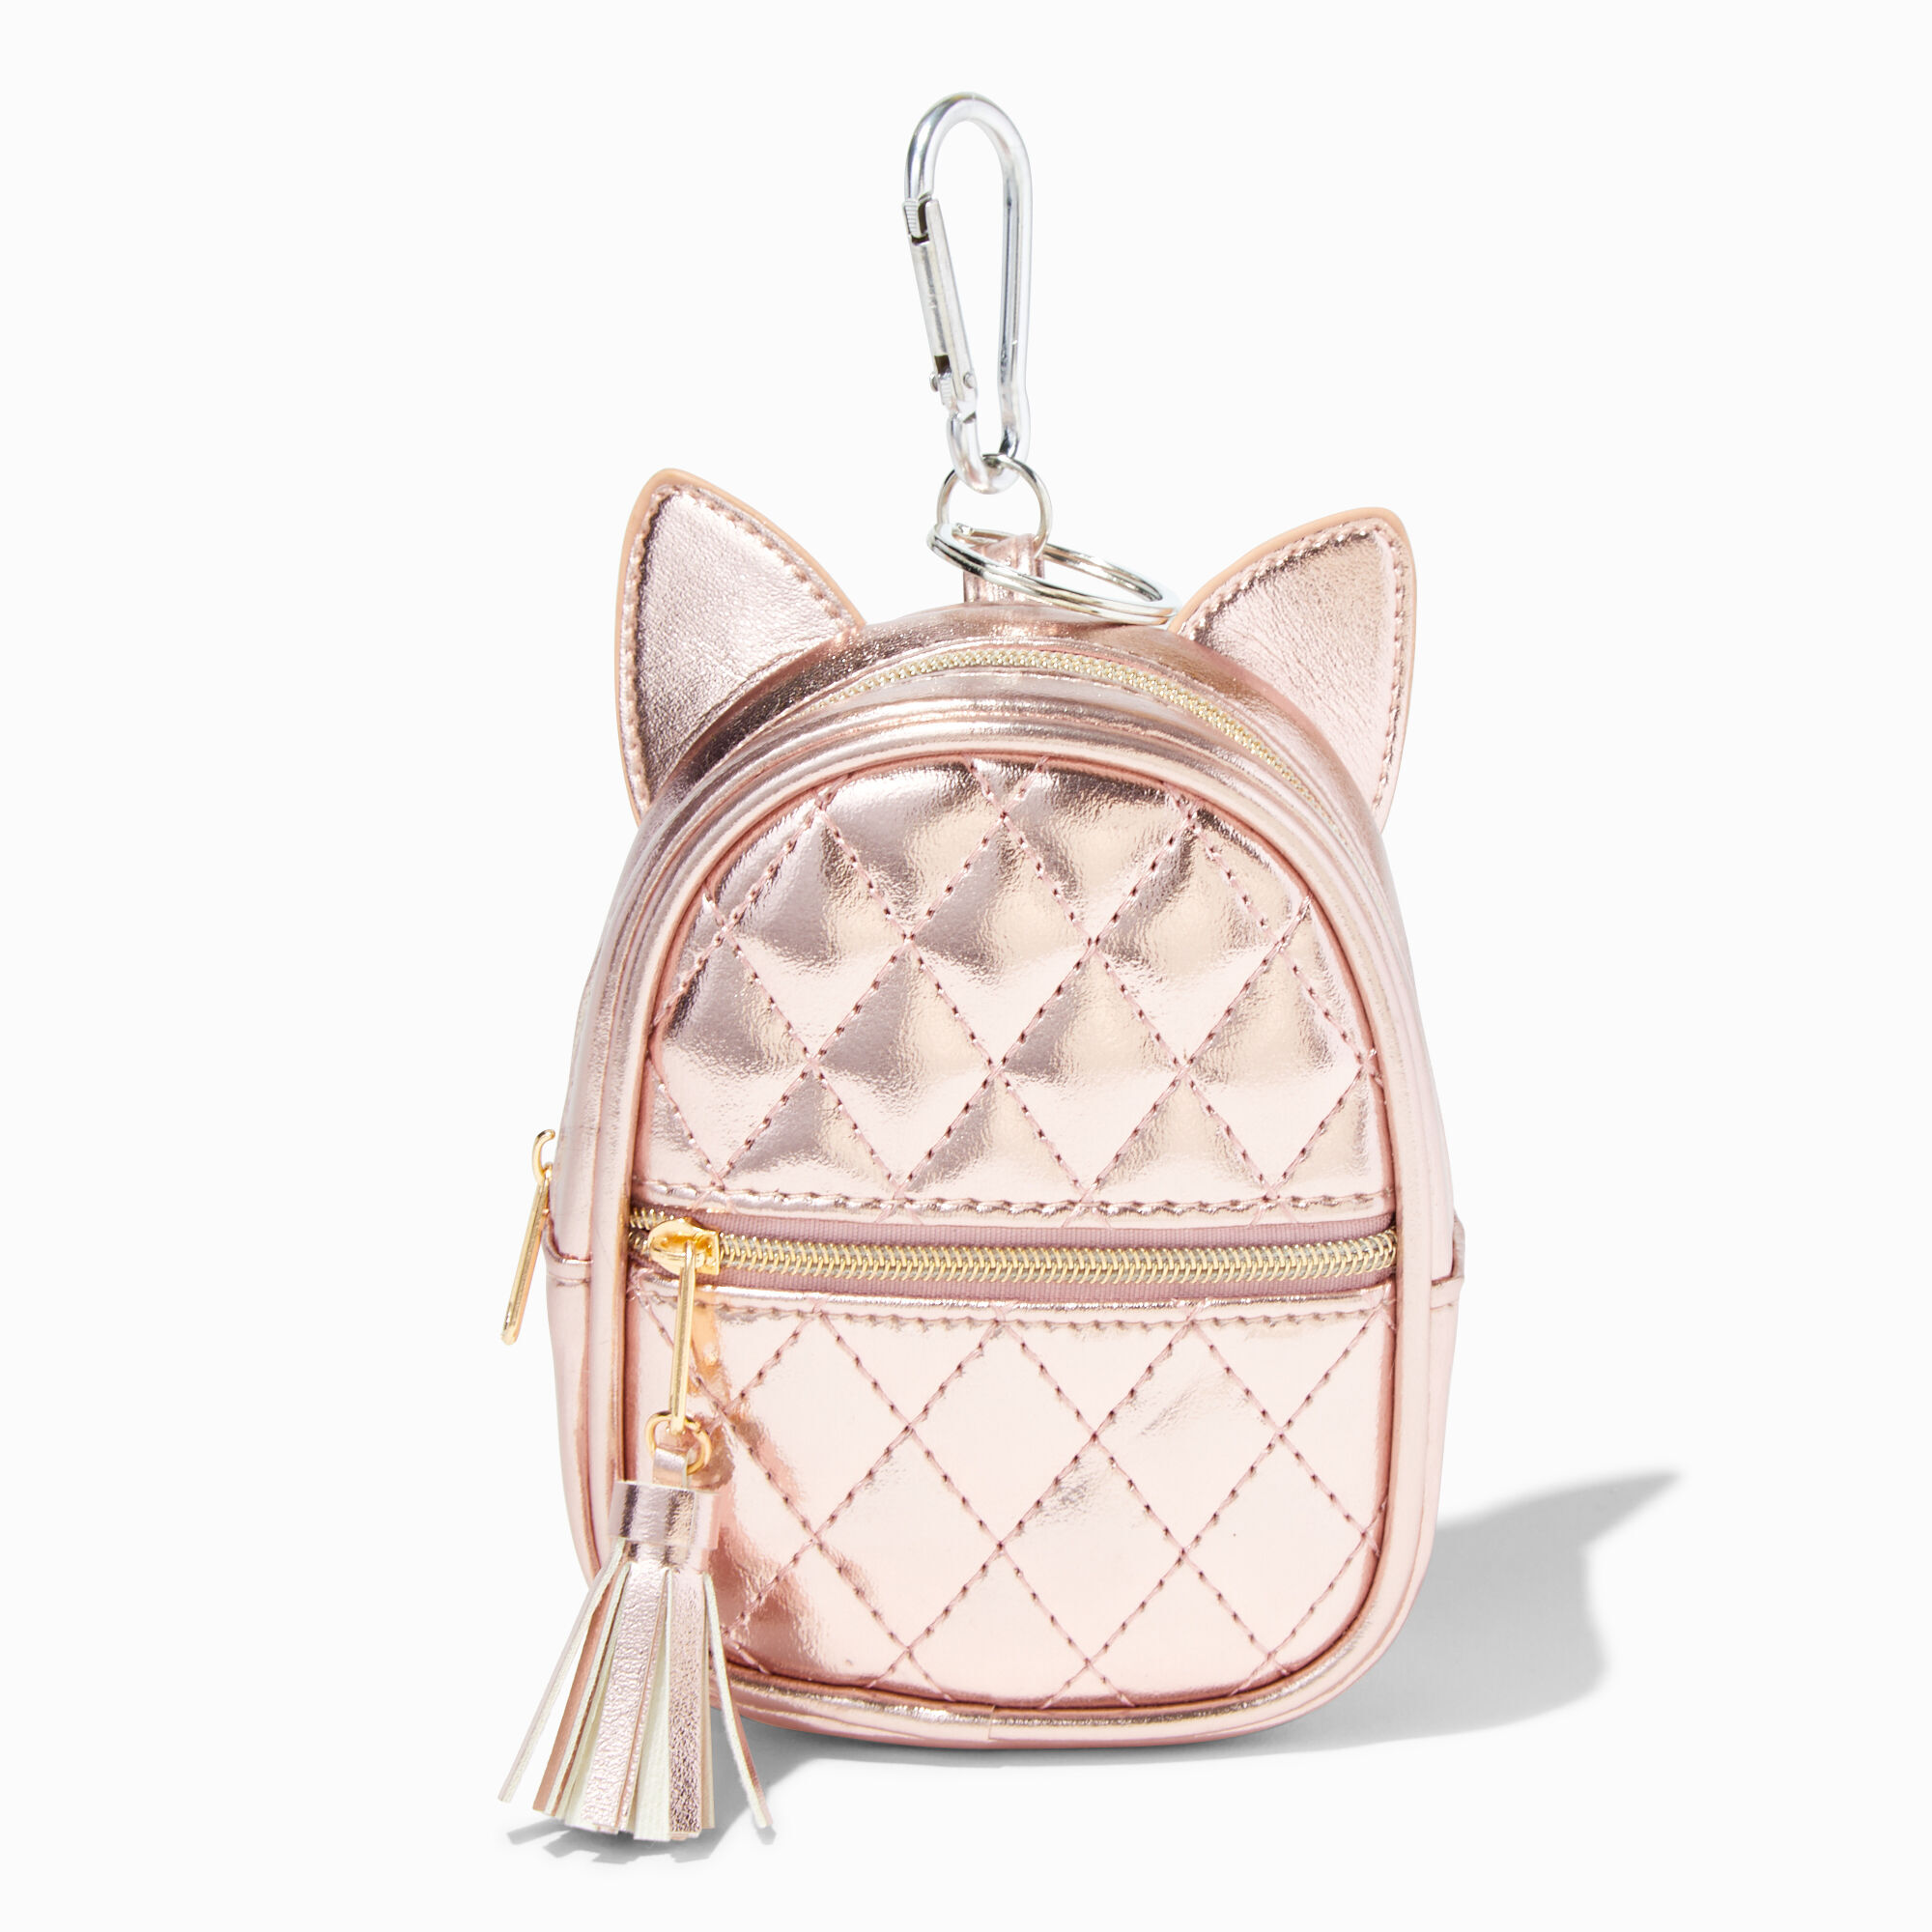 Claire's Club Metallic Heart Pink Mini Backpack